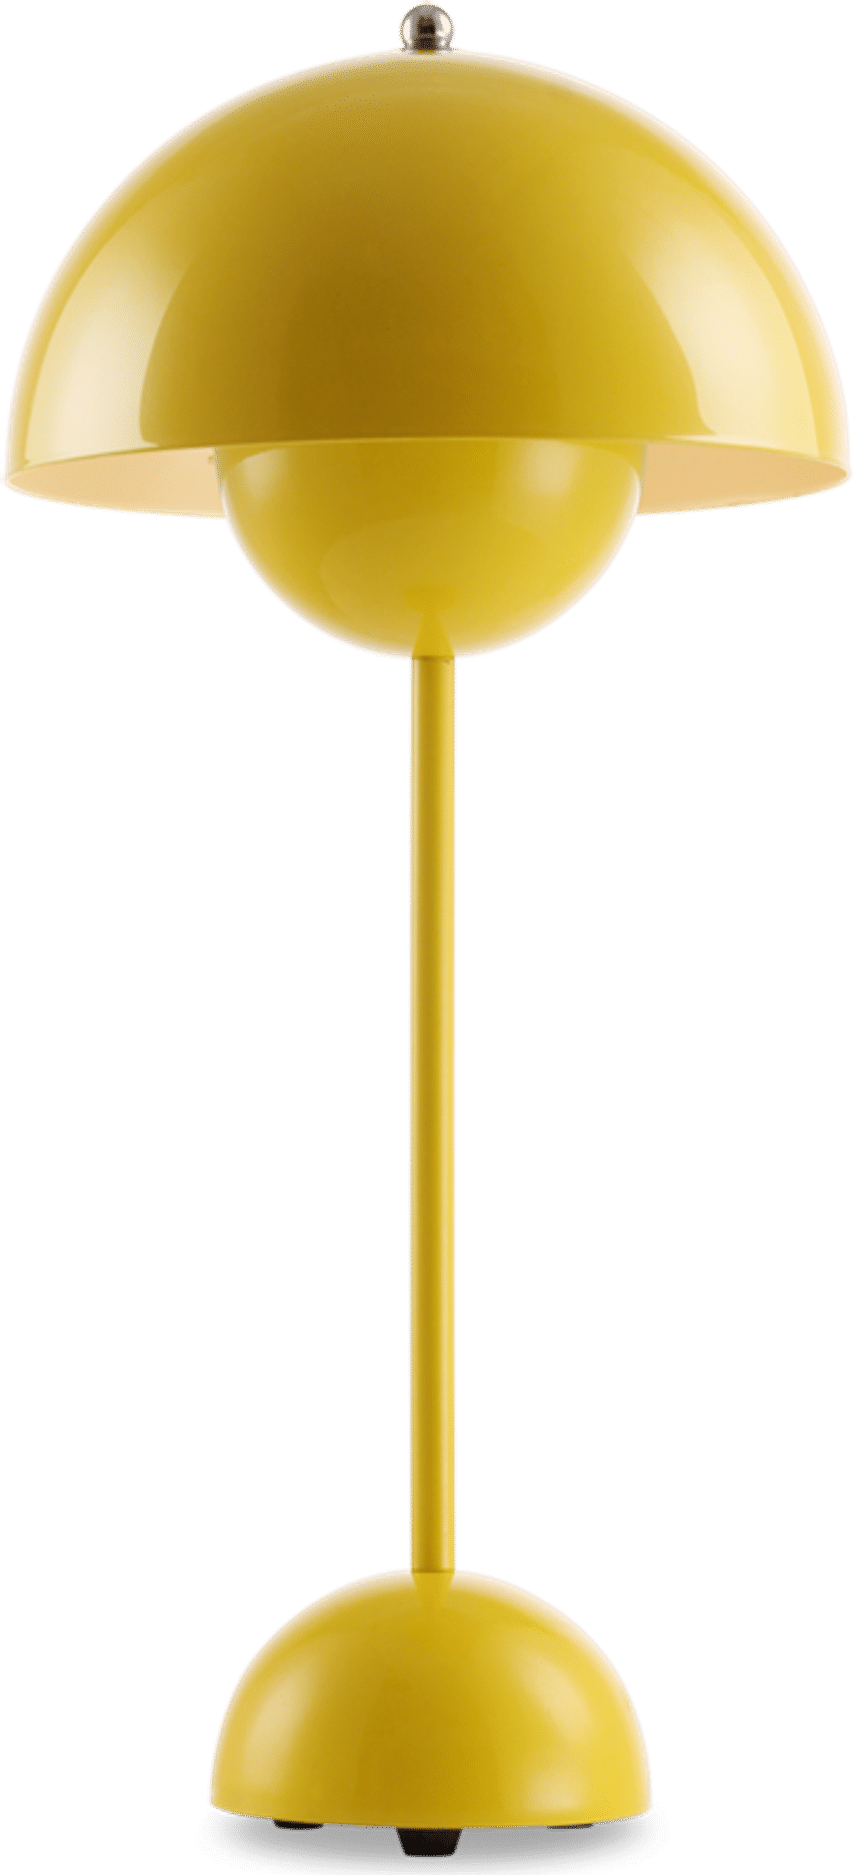 Bordlampe i blomsterpottestil Yellow image.